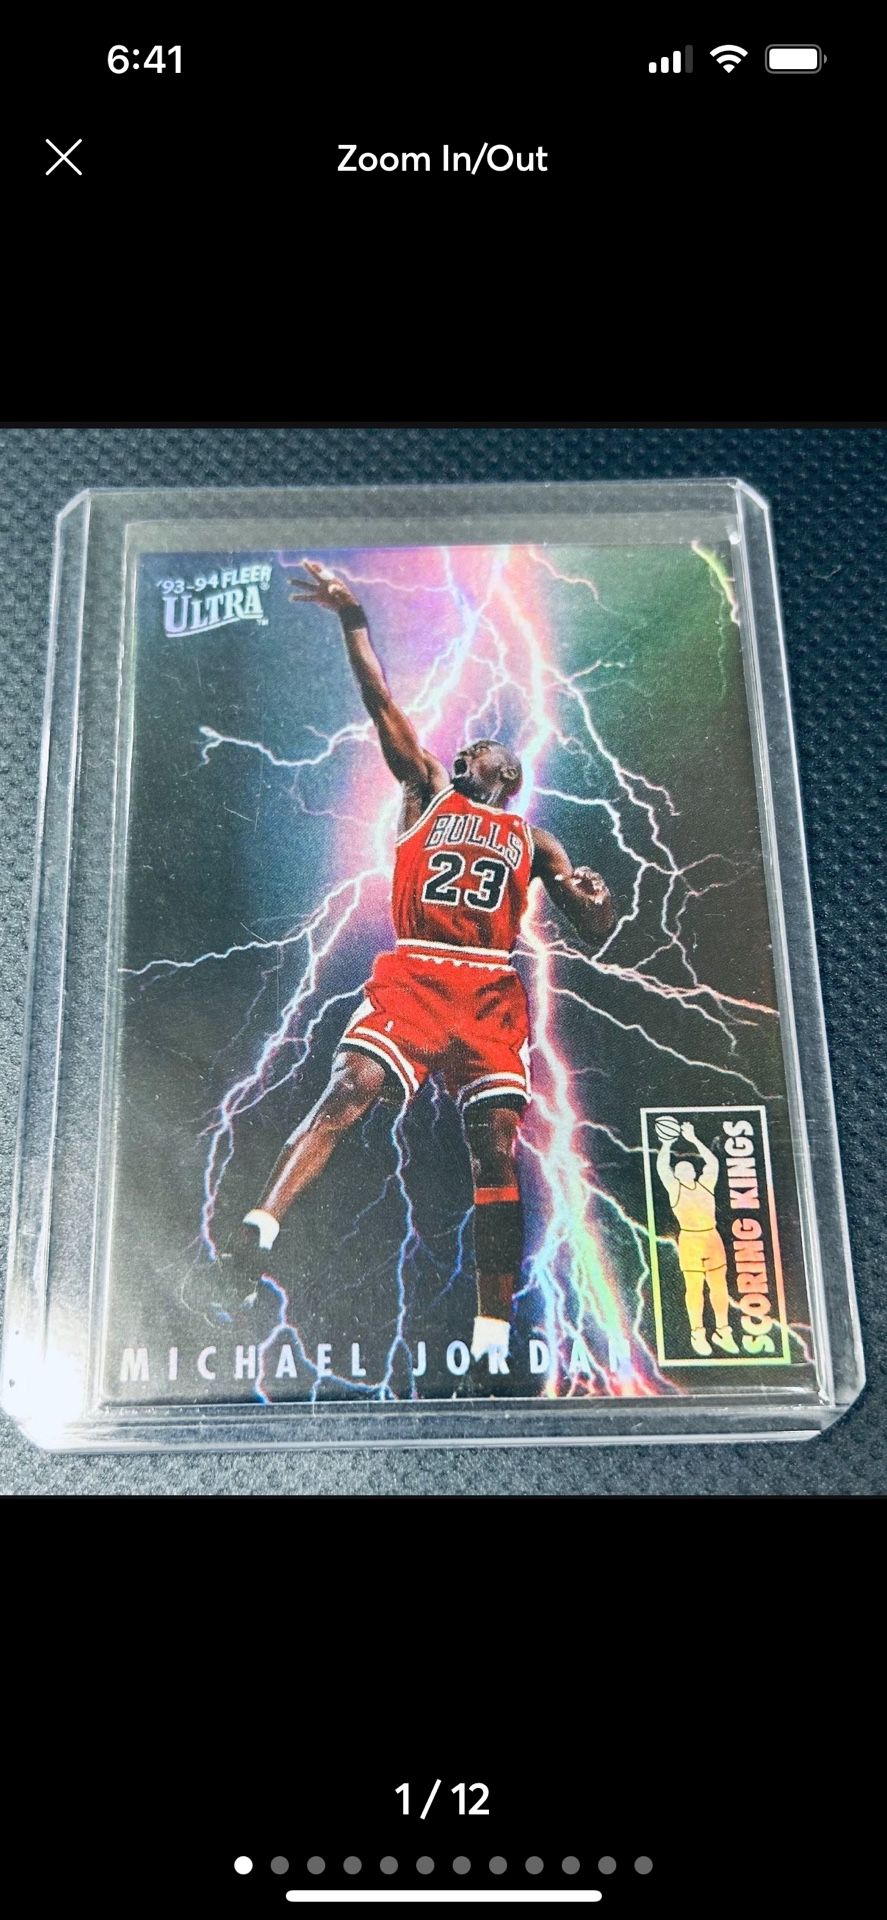 1993-94 Fleer Ultra Scoring Kings Michael Jordan CUSTOM Reprint $50